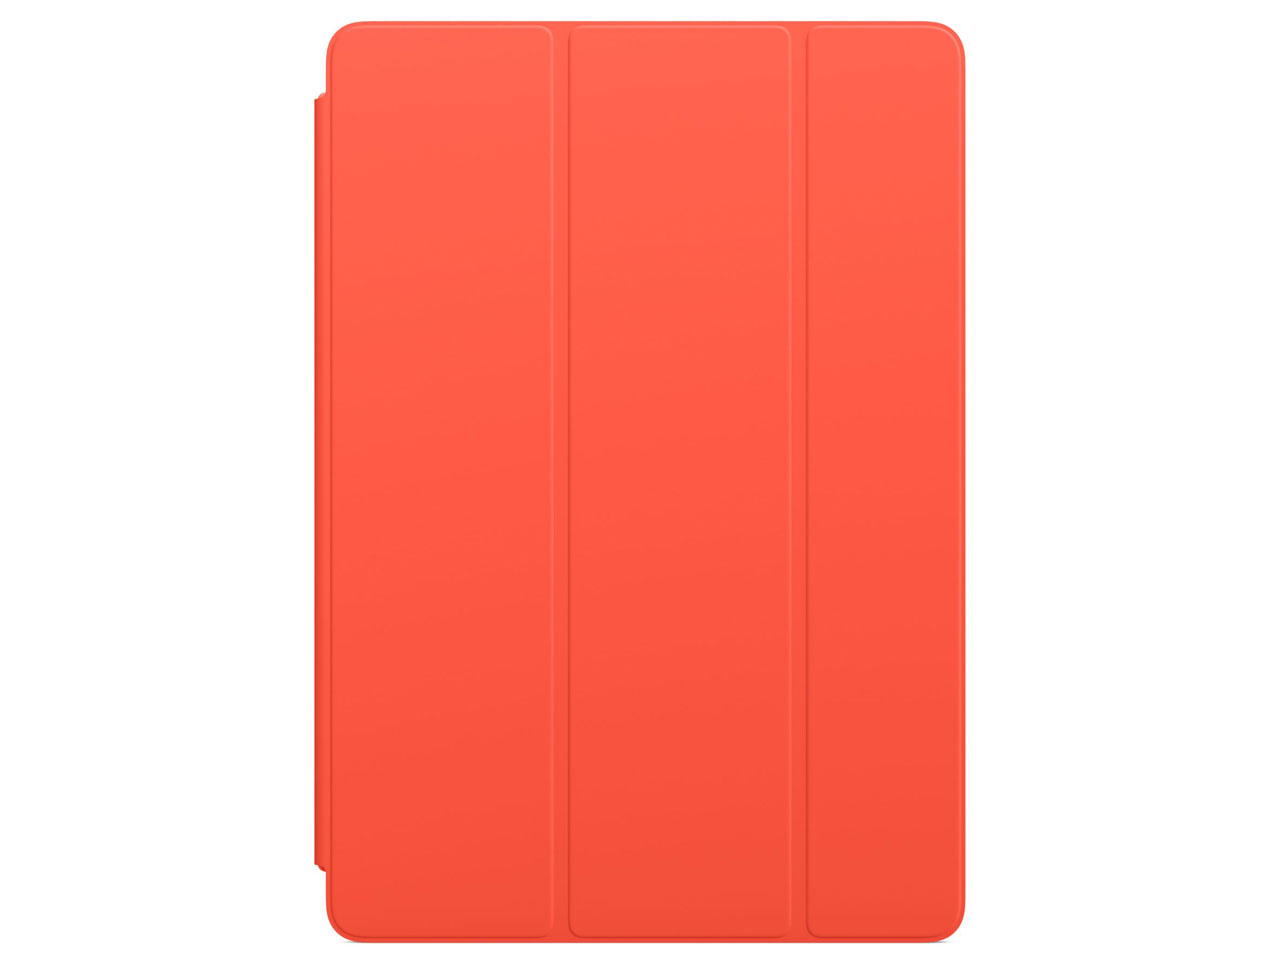 iPad(第8世代)用 Smart Cover MJM83FE/A [エレクトリックオレンジ]